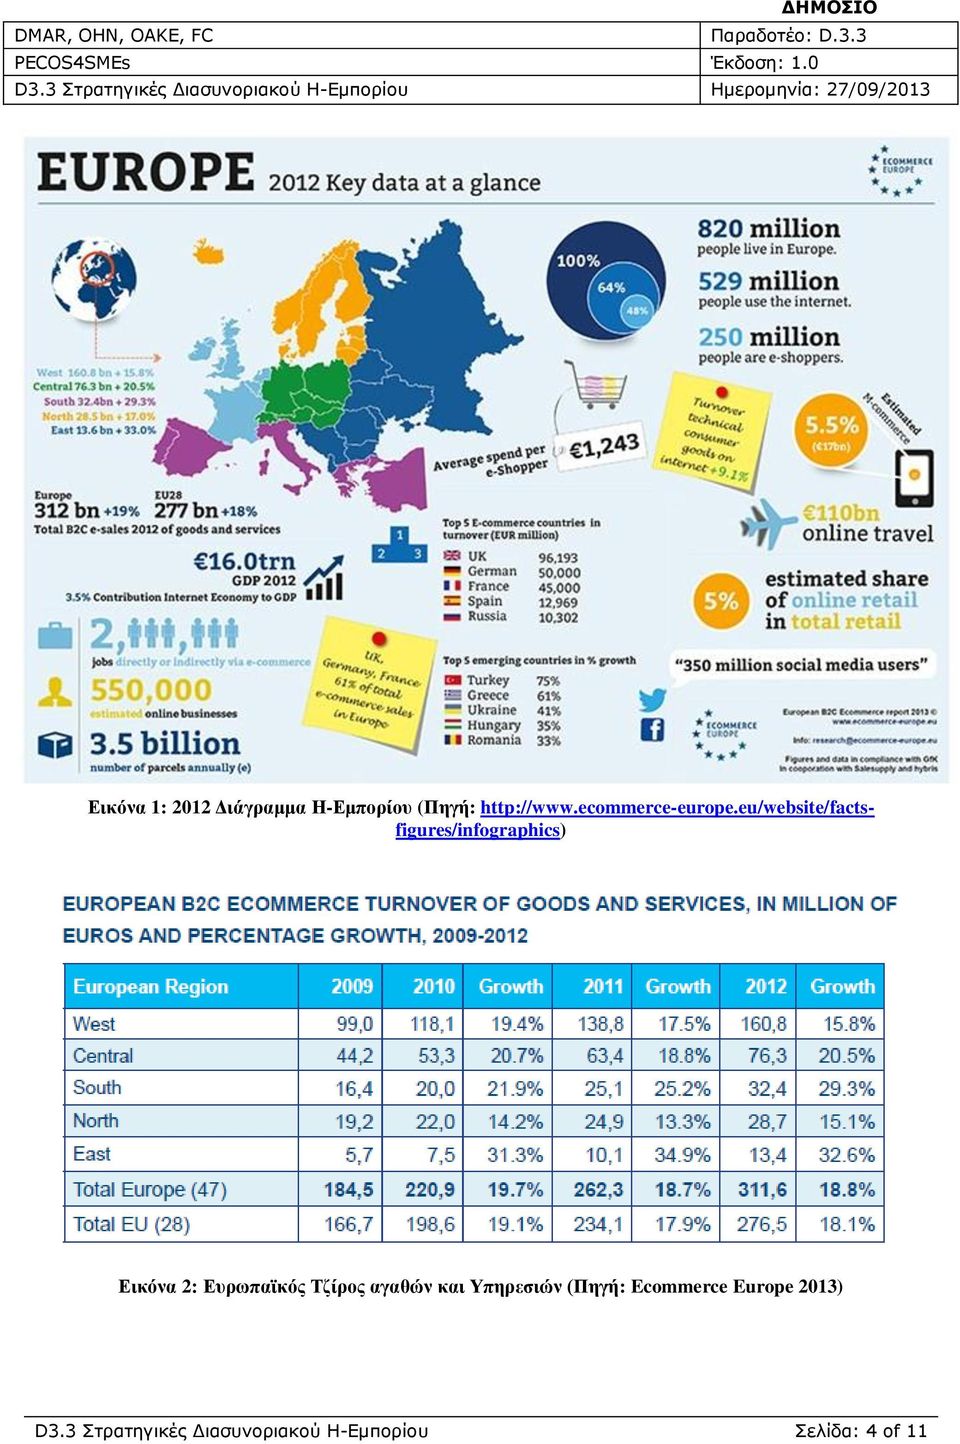 eu/website/factsfigures/infographics) Εικόνα 2: Εσρωπαϊκός